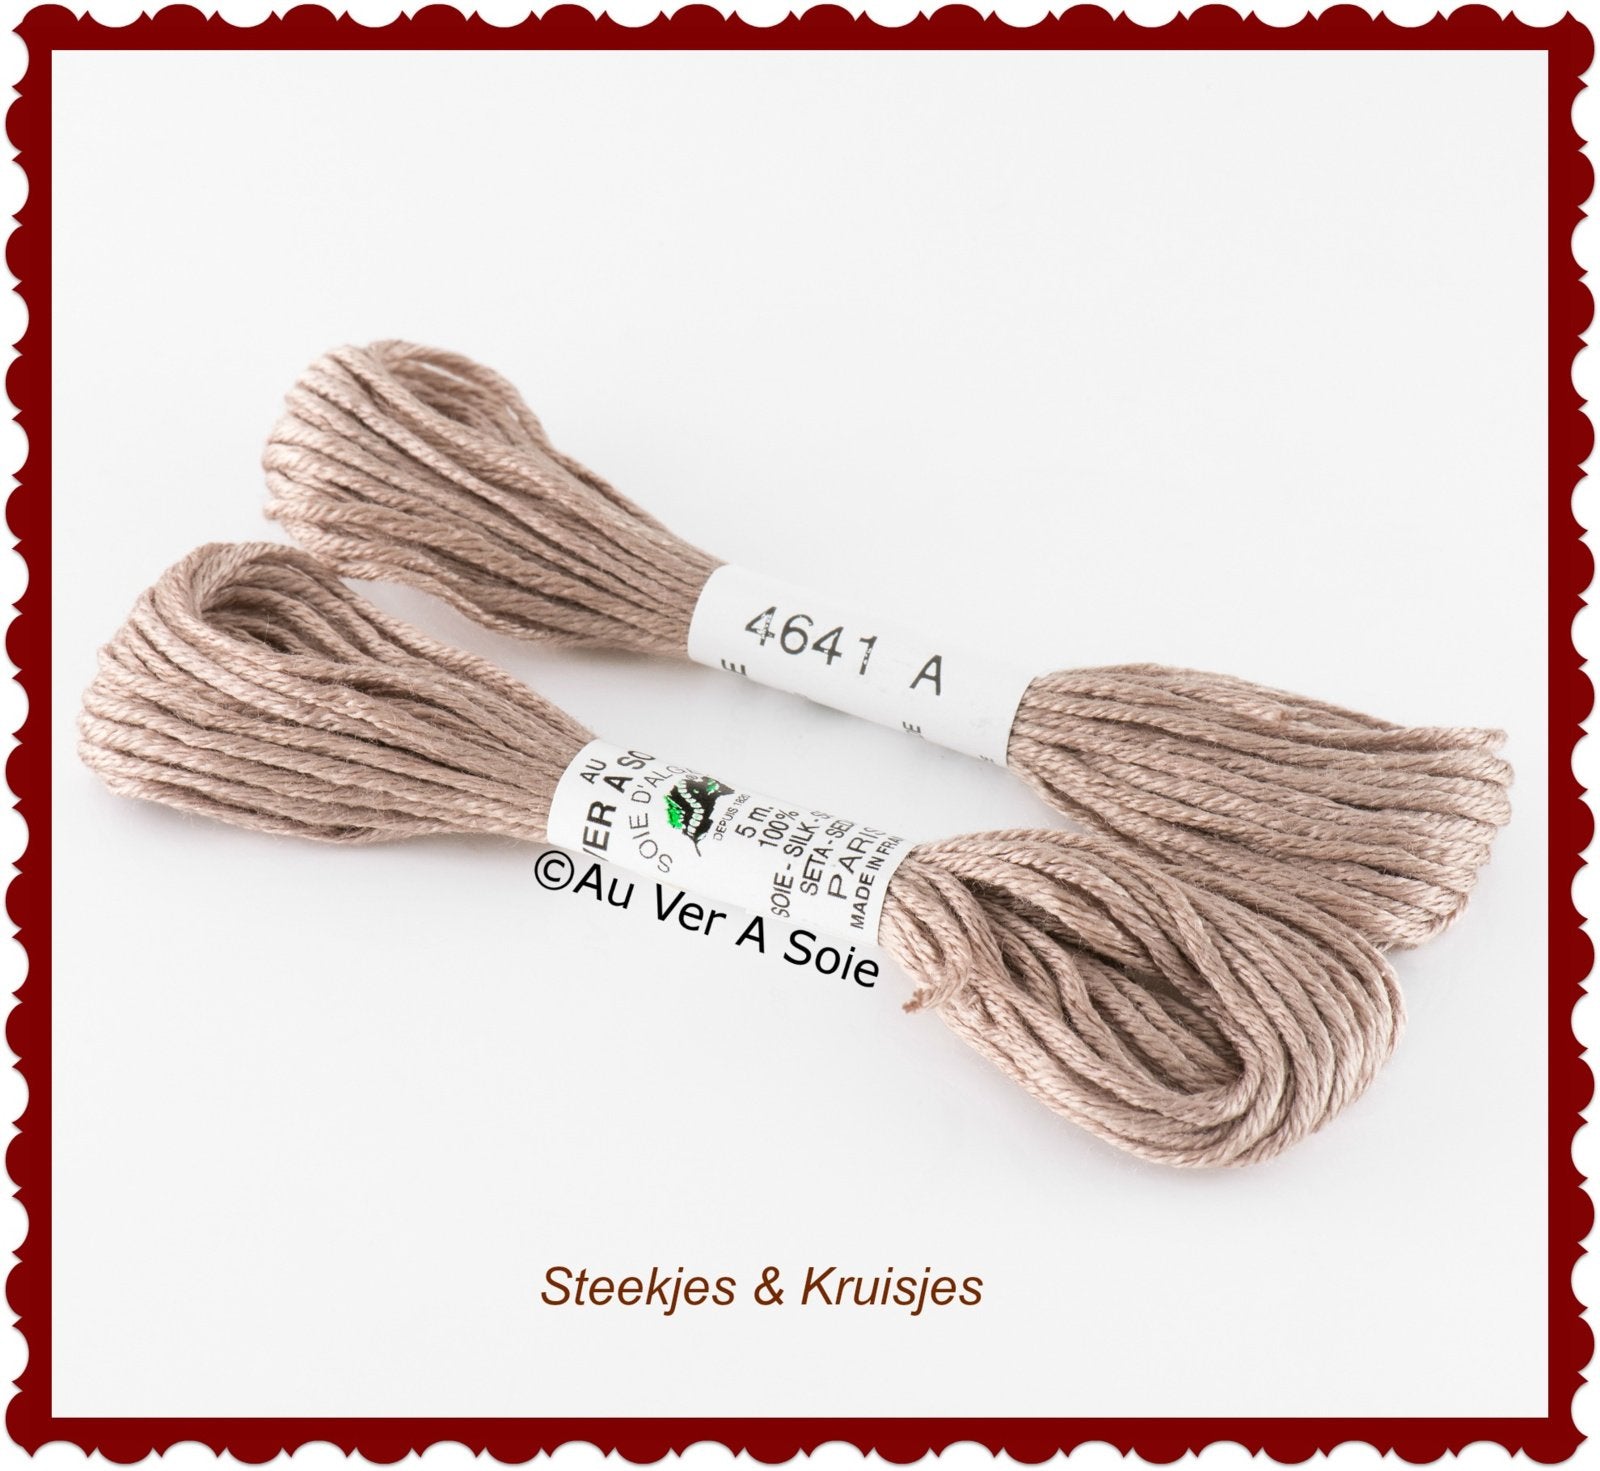 Au ver ie "soie d'alger" silk yarn color no. 4641